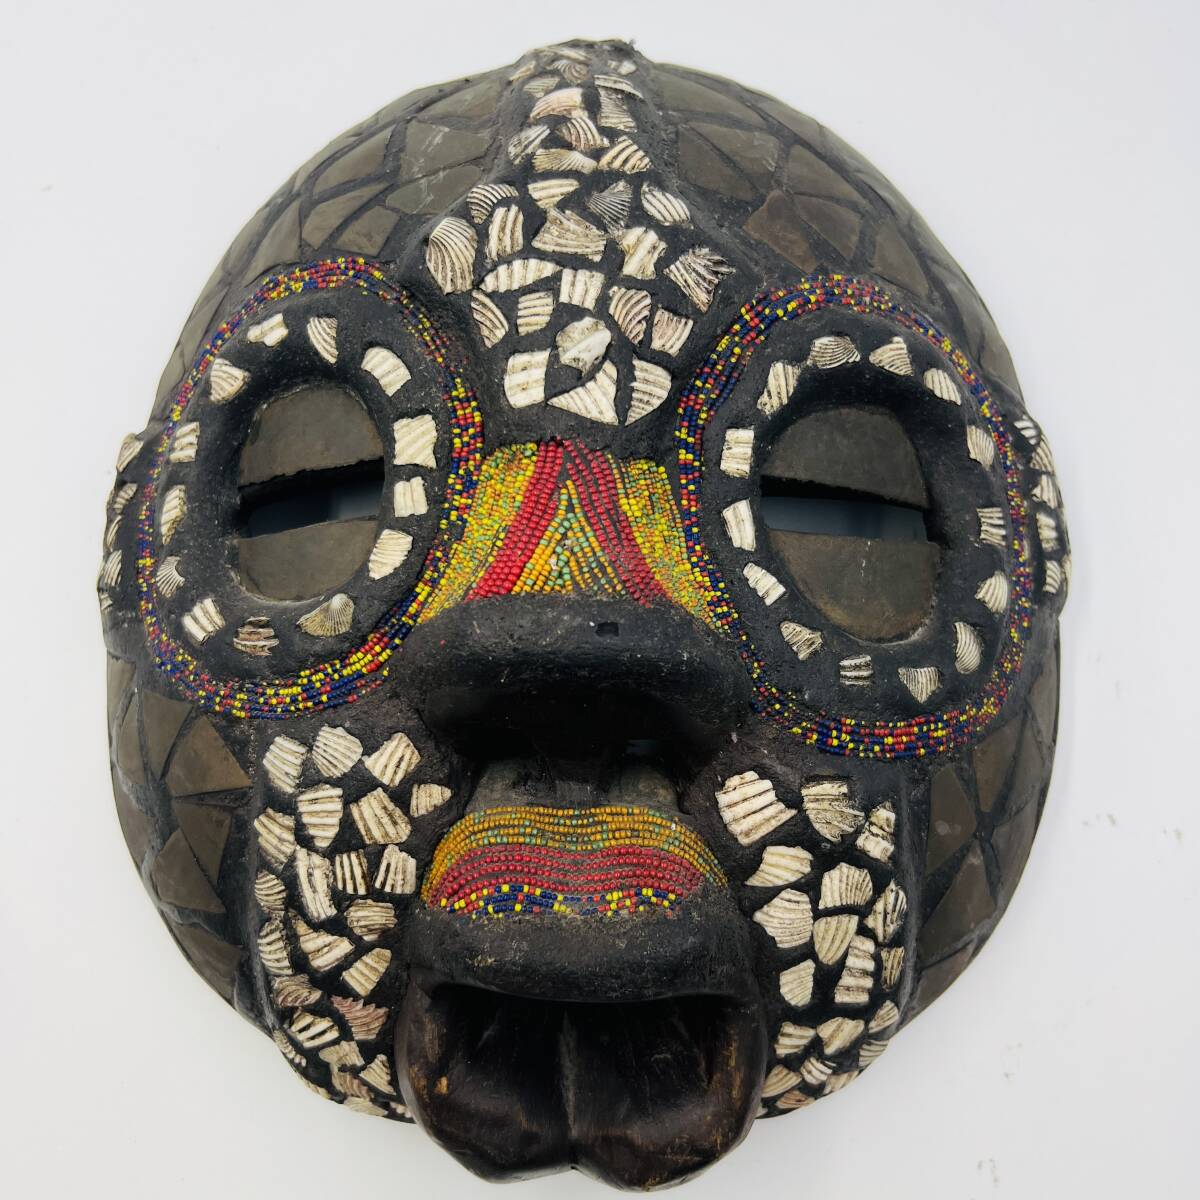 [690E] Africa mask surface Africa n antique race Africa interior decoration ornament folkcraft goods handicraft art objet d'art tree carving beads 